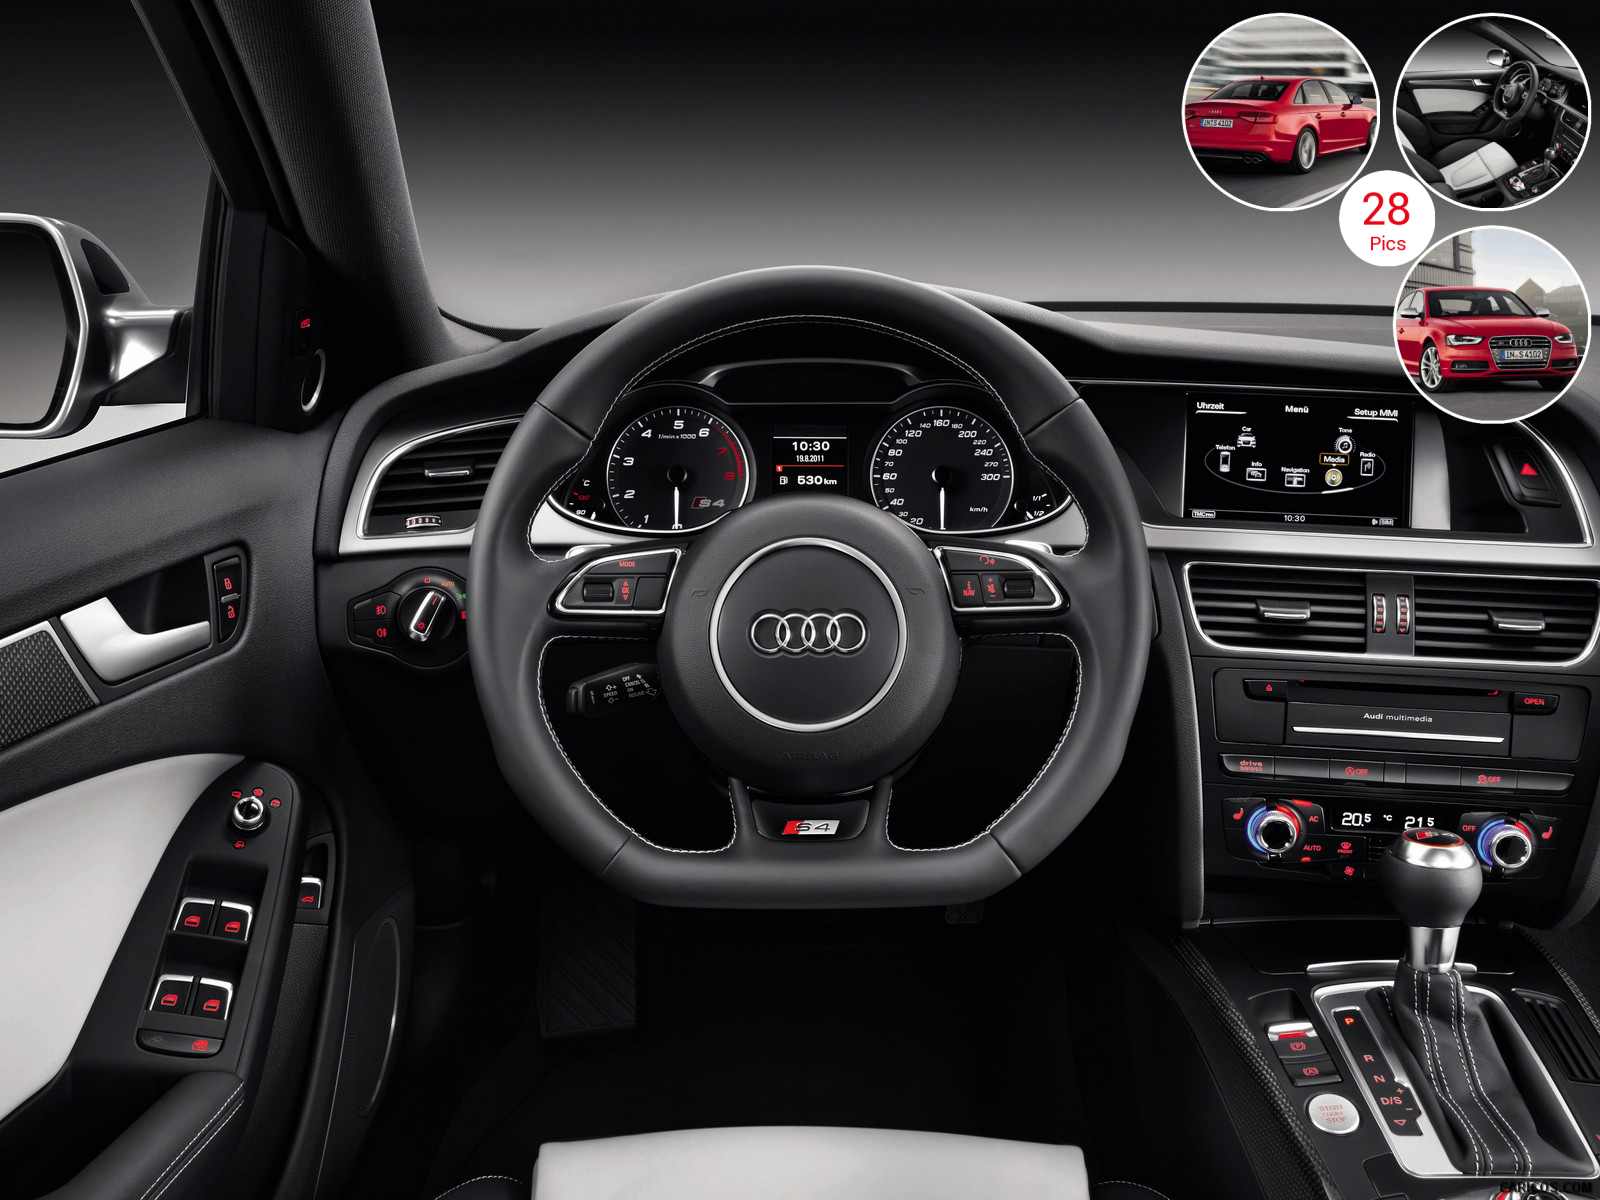 2013 Audi S4 - Interior Wallpaper 1600x1200